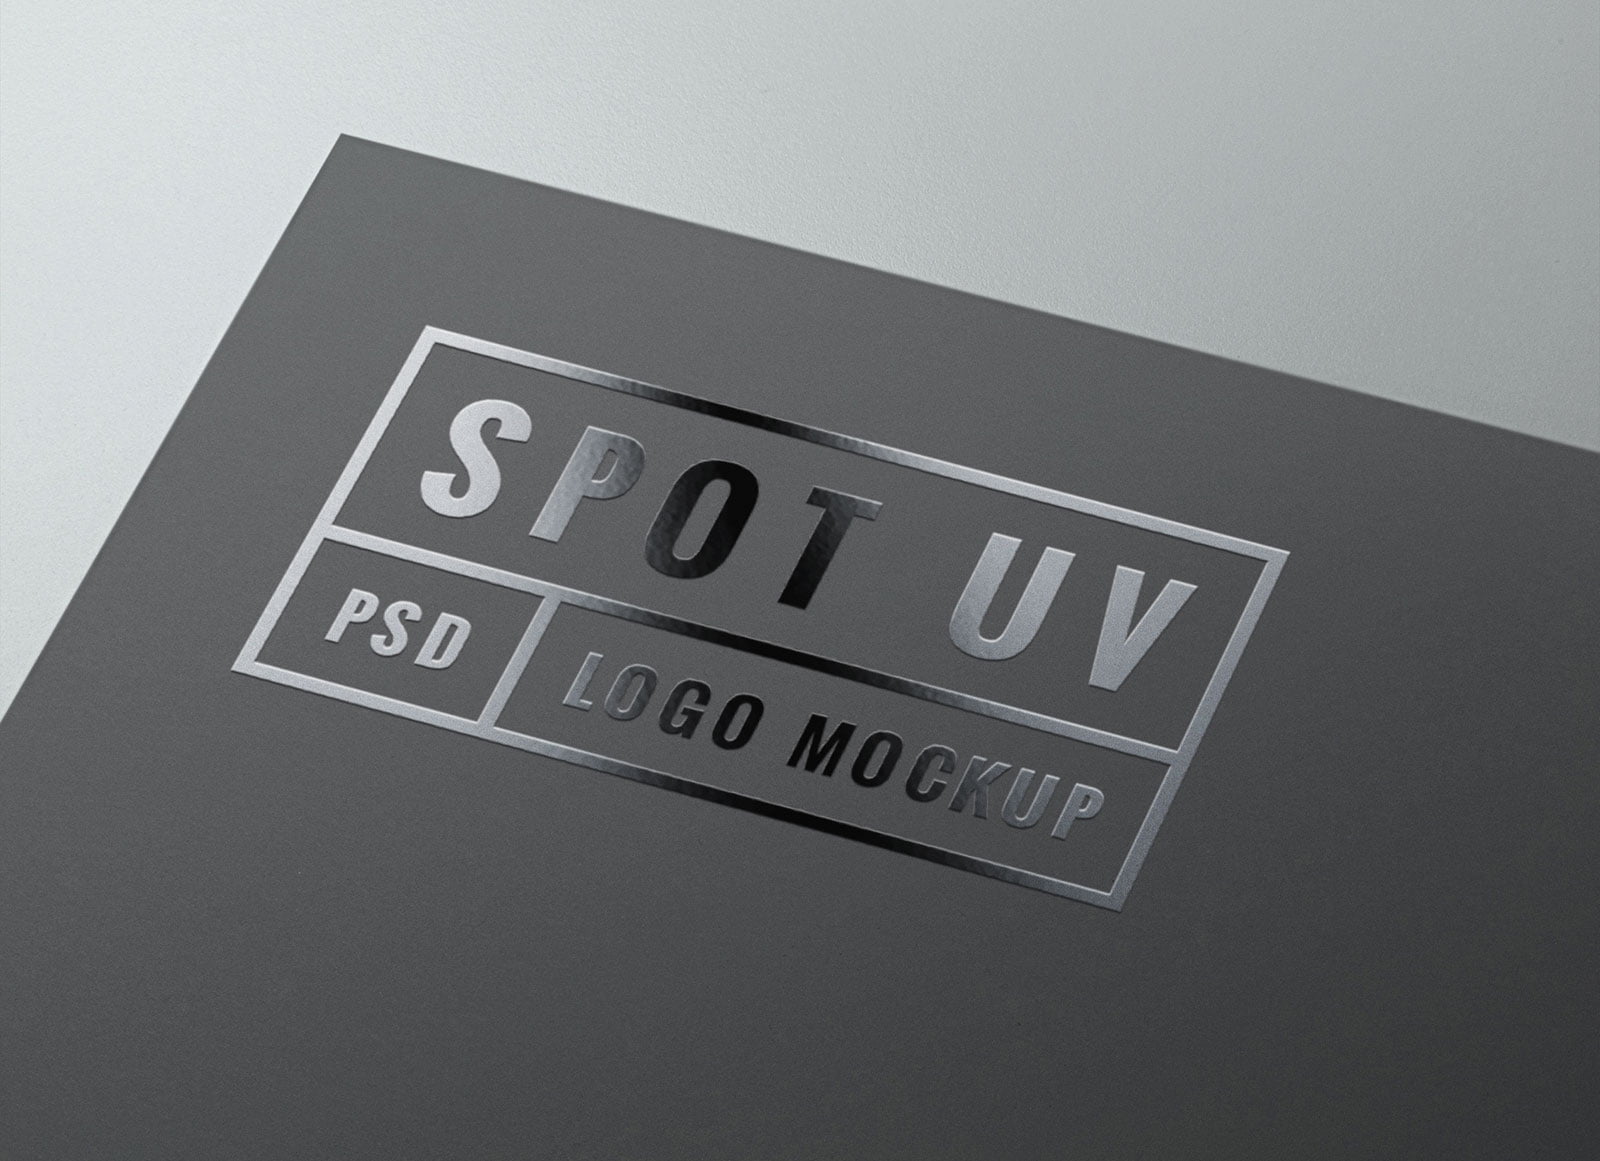 spot uv printing business cards 1